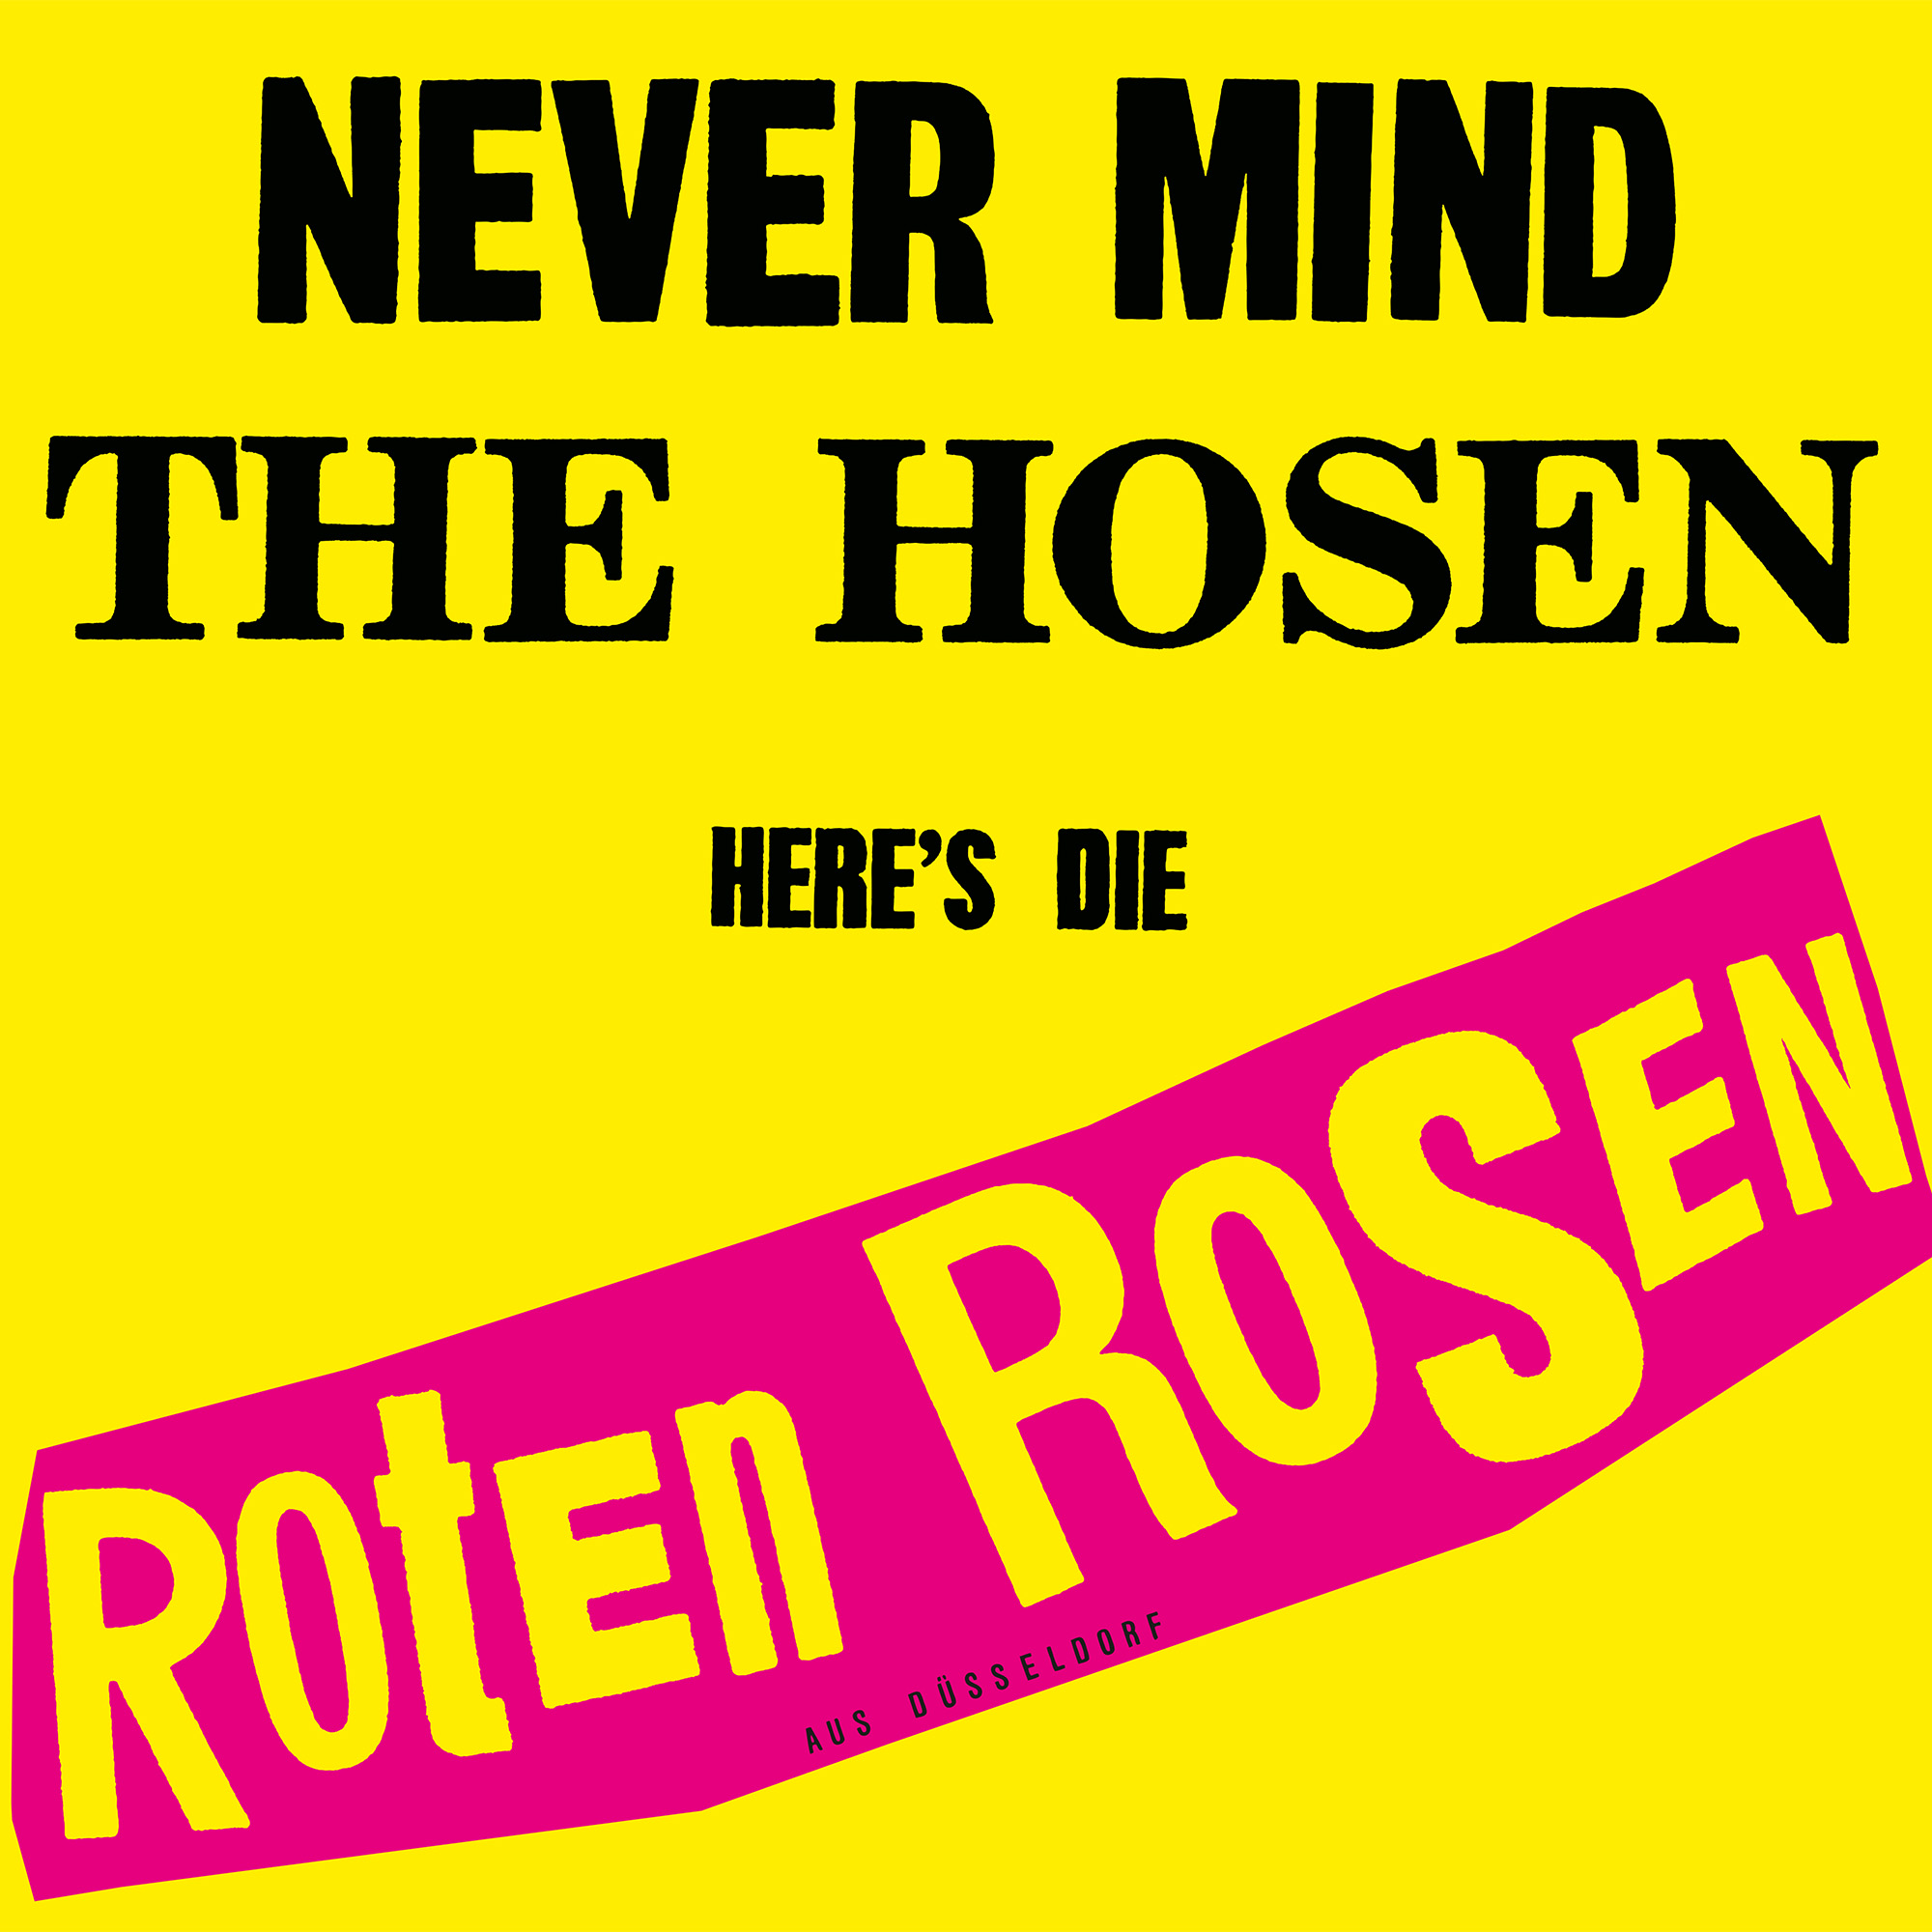 Die Roten Rosen - The Roten Die (Vinyl) Rosen Mind - Hosen-Here\'s Never